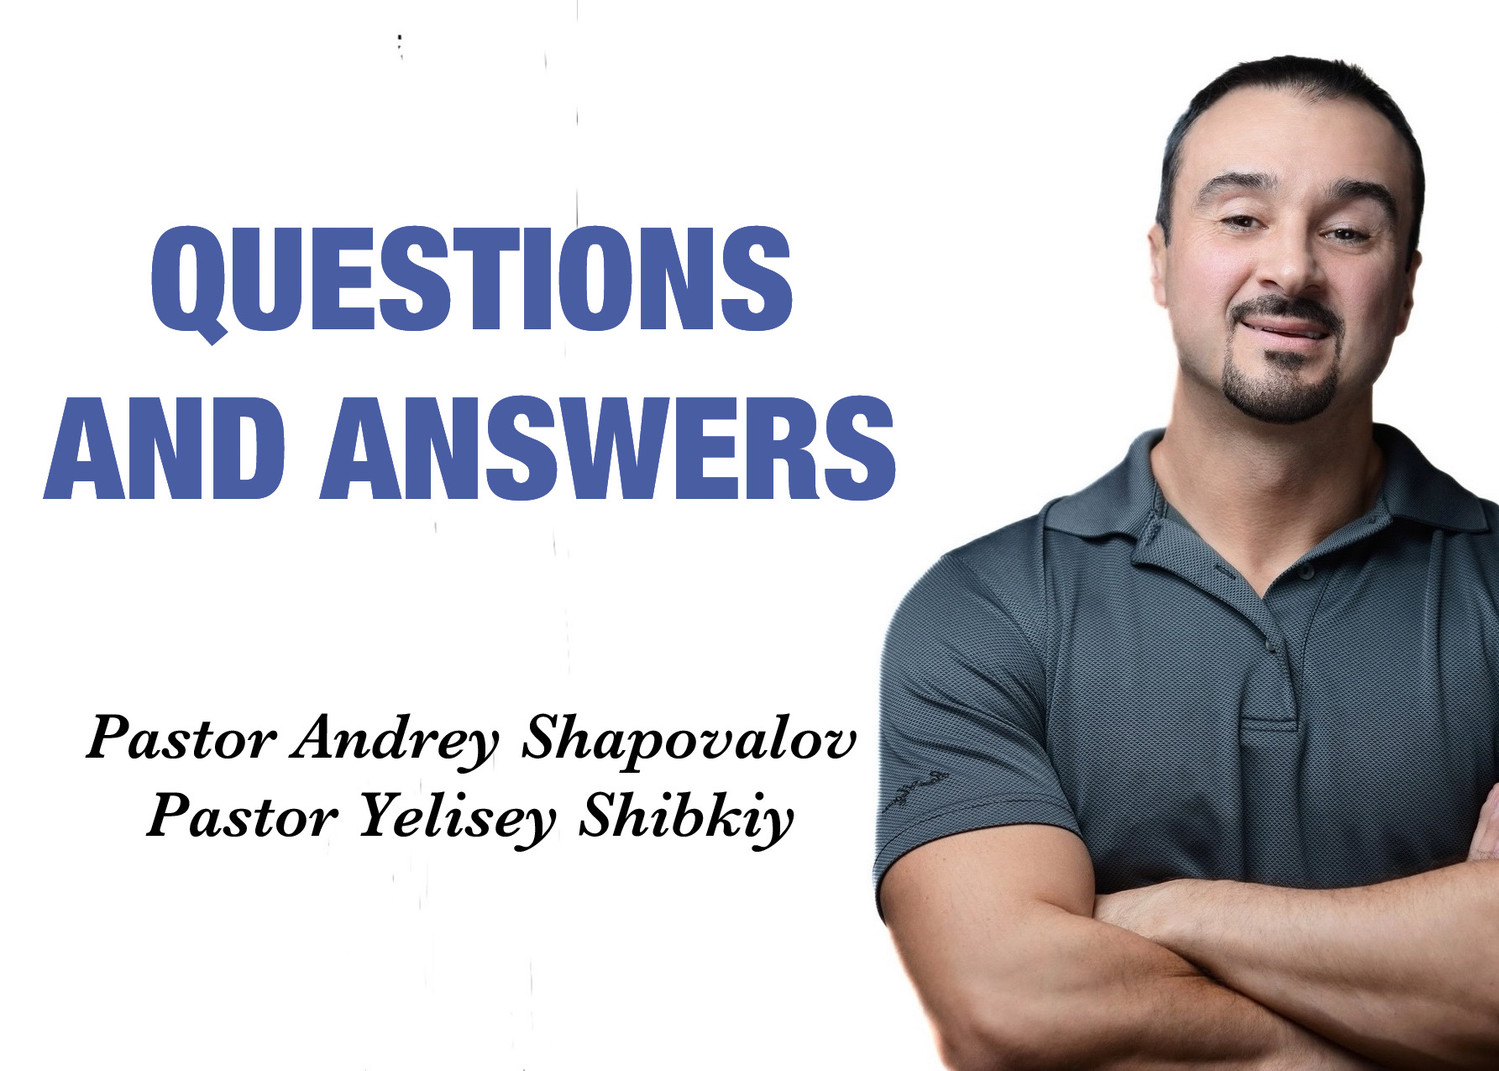 “QUESTIONS AND ANSWERS” Pastors Andrey Shapovalov & Yelisey Shibkiy